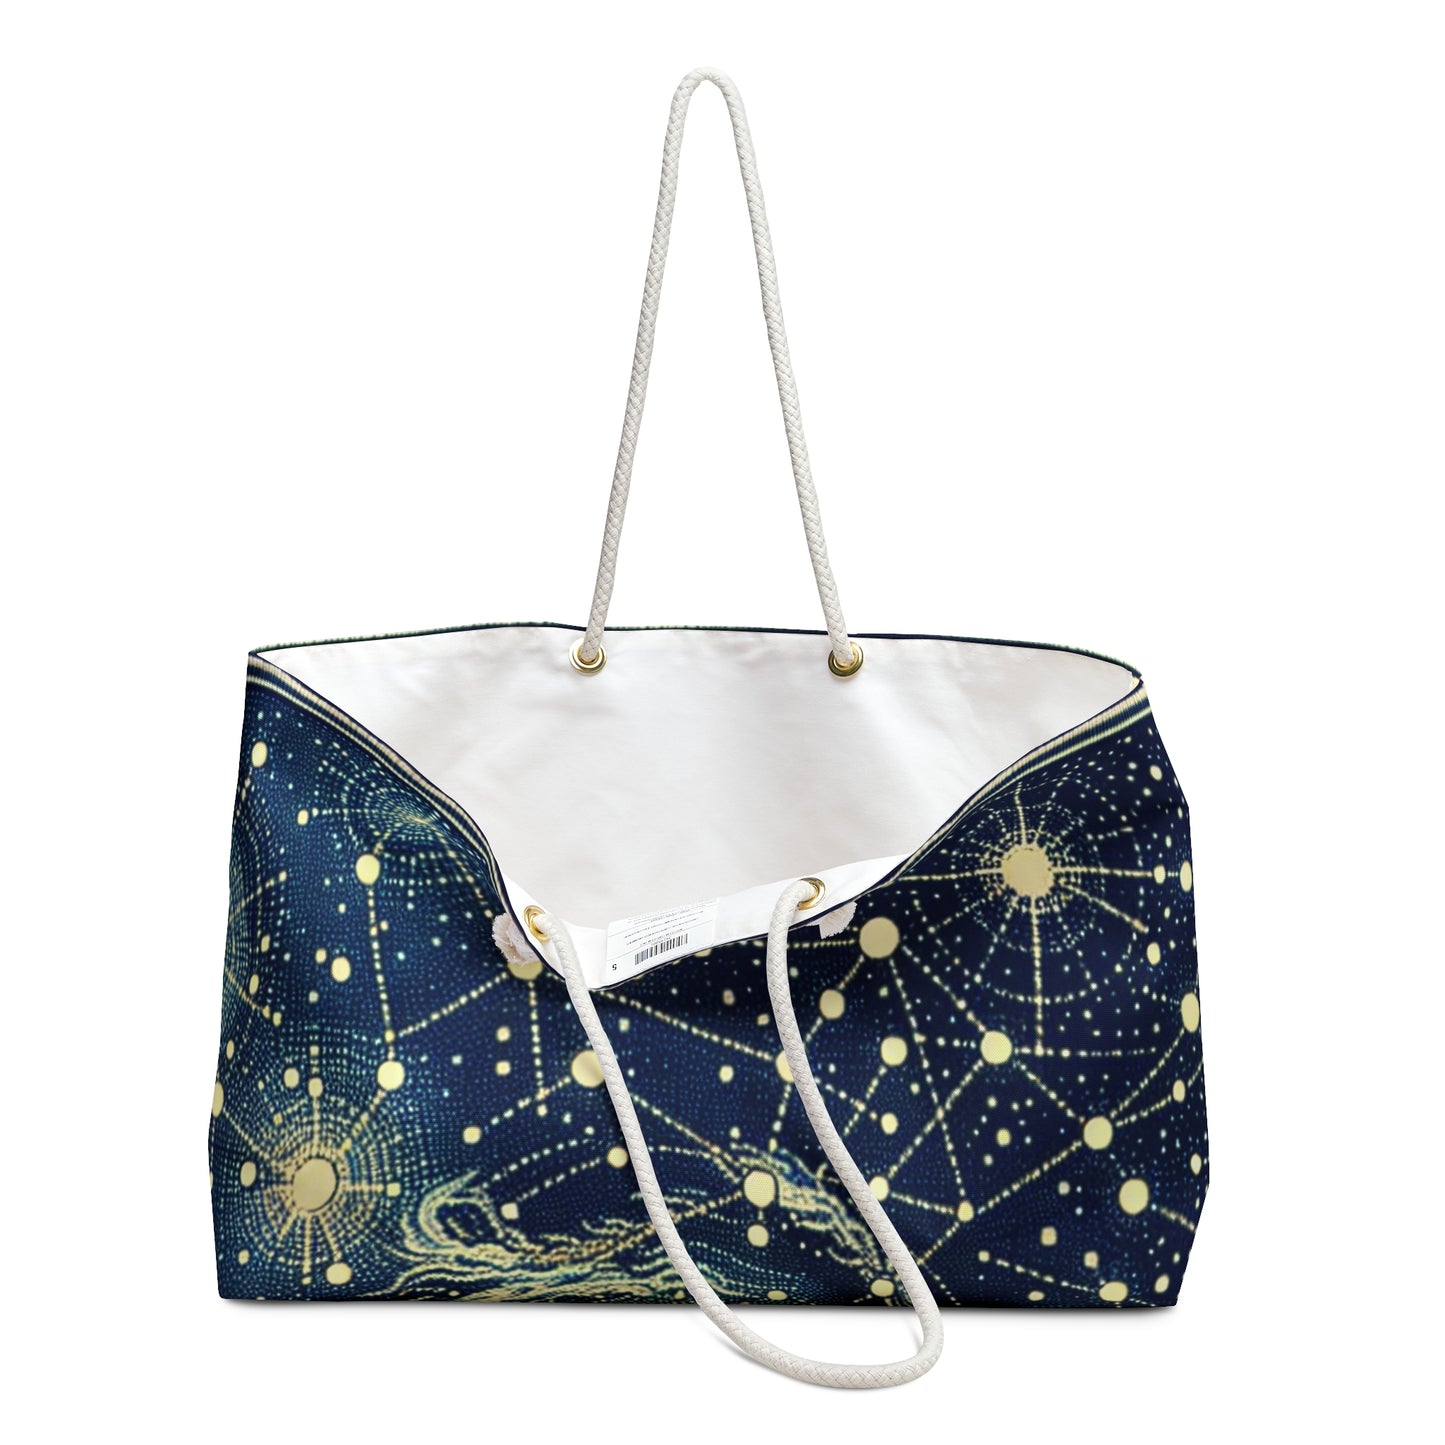 "Dotting the Heavens" - The Alien Weekender Bag Pointillism Style